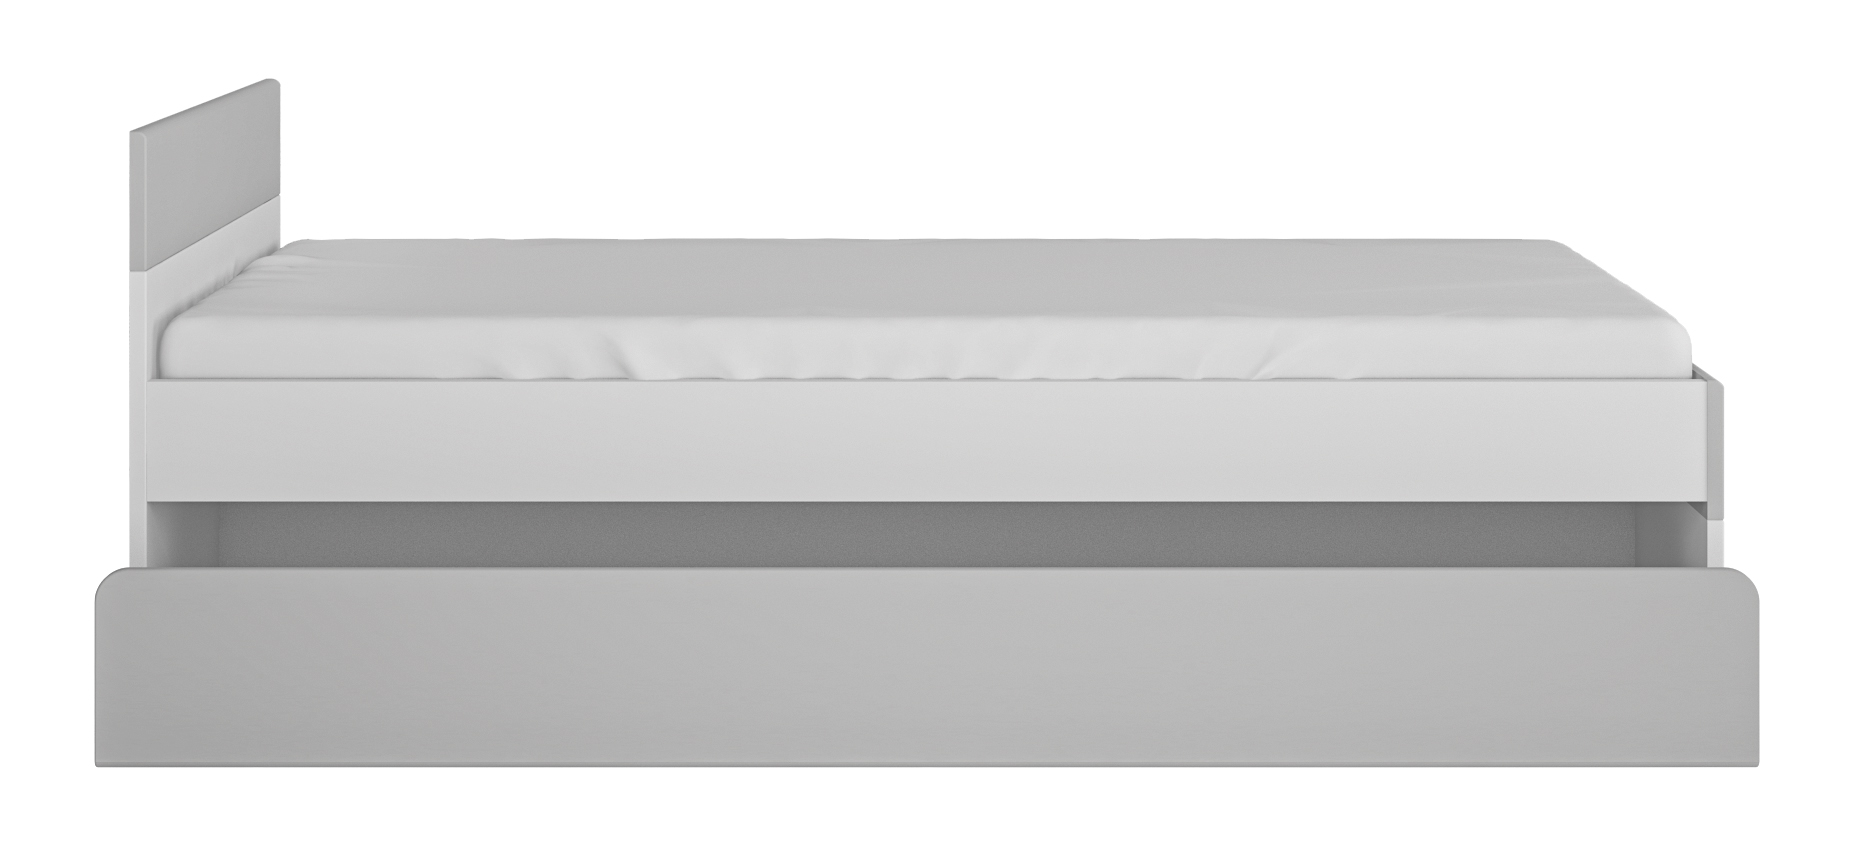 Furnival Jugendbett Albi mit Bettkasten Weiß/Grau 120x200 cm